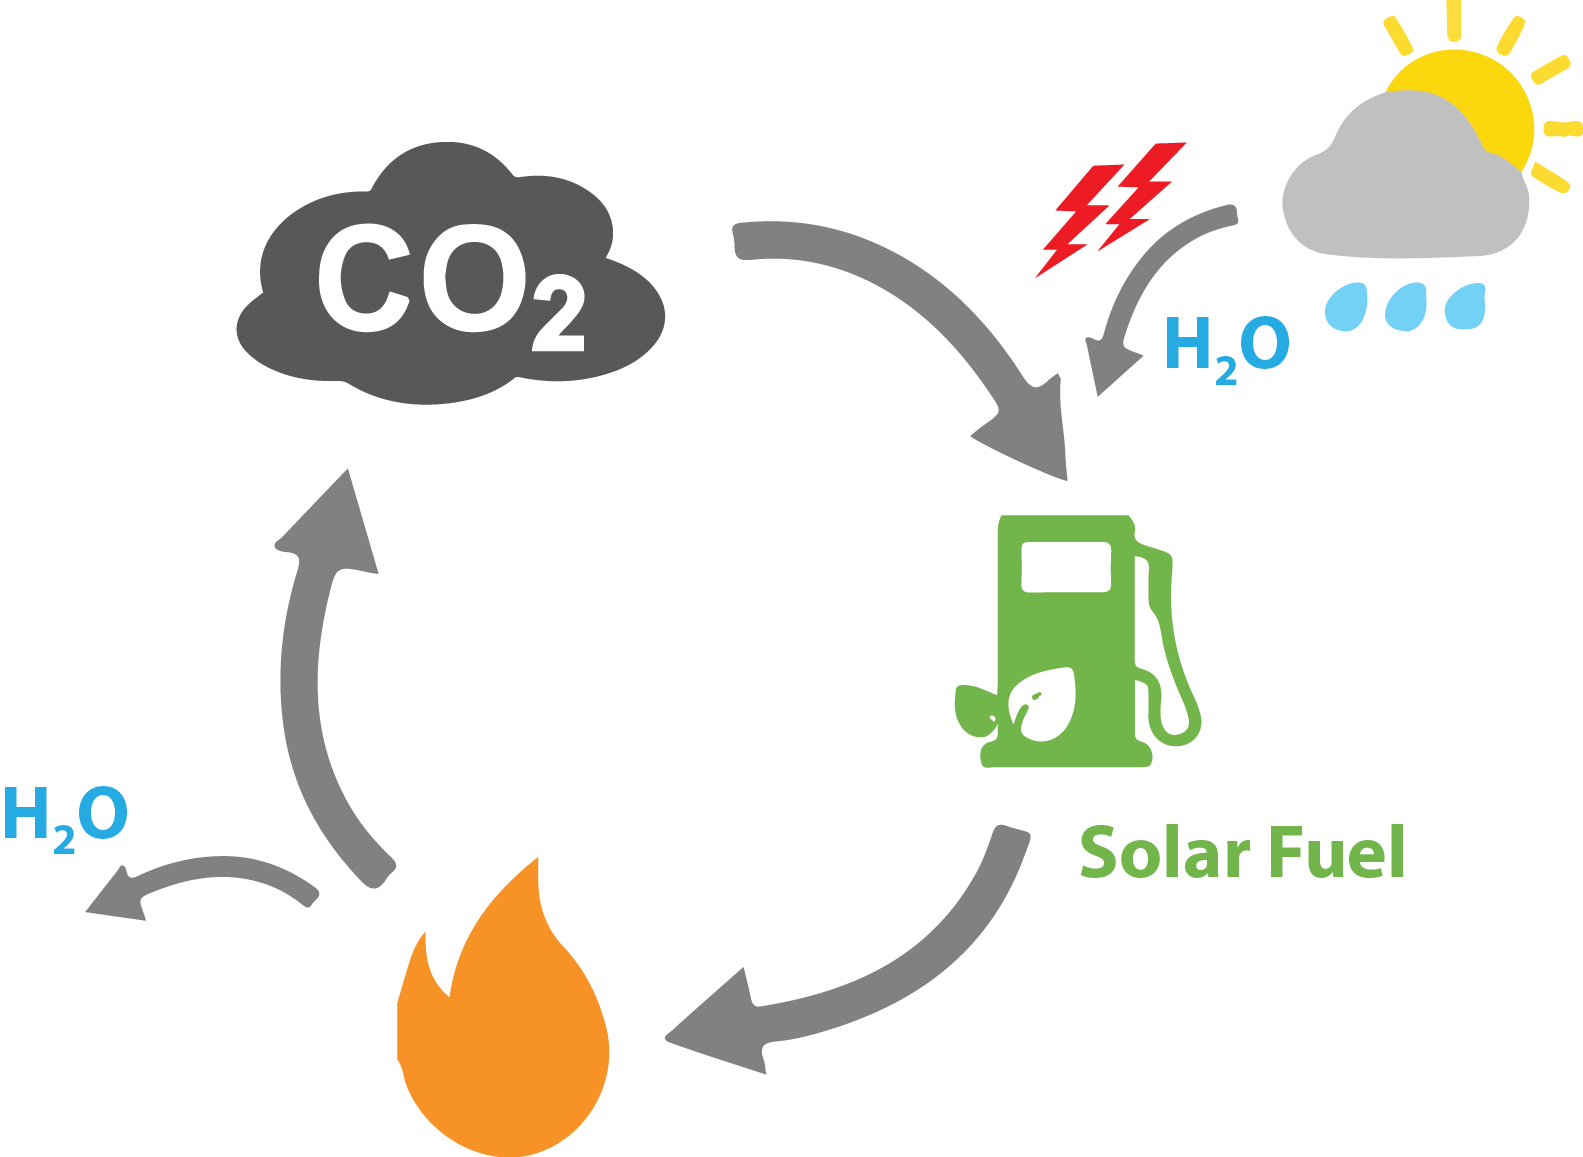 CO2 cycle